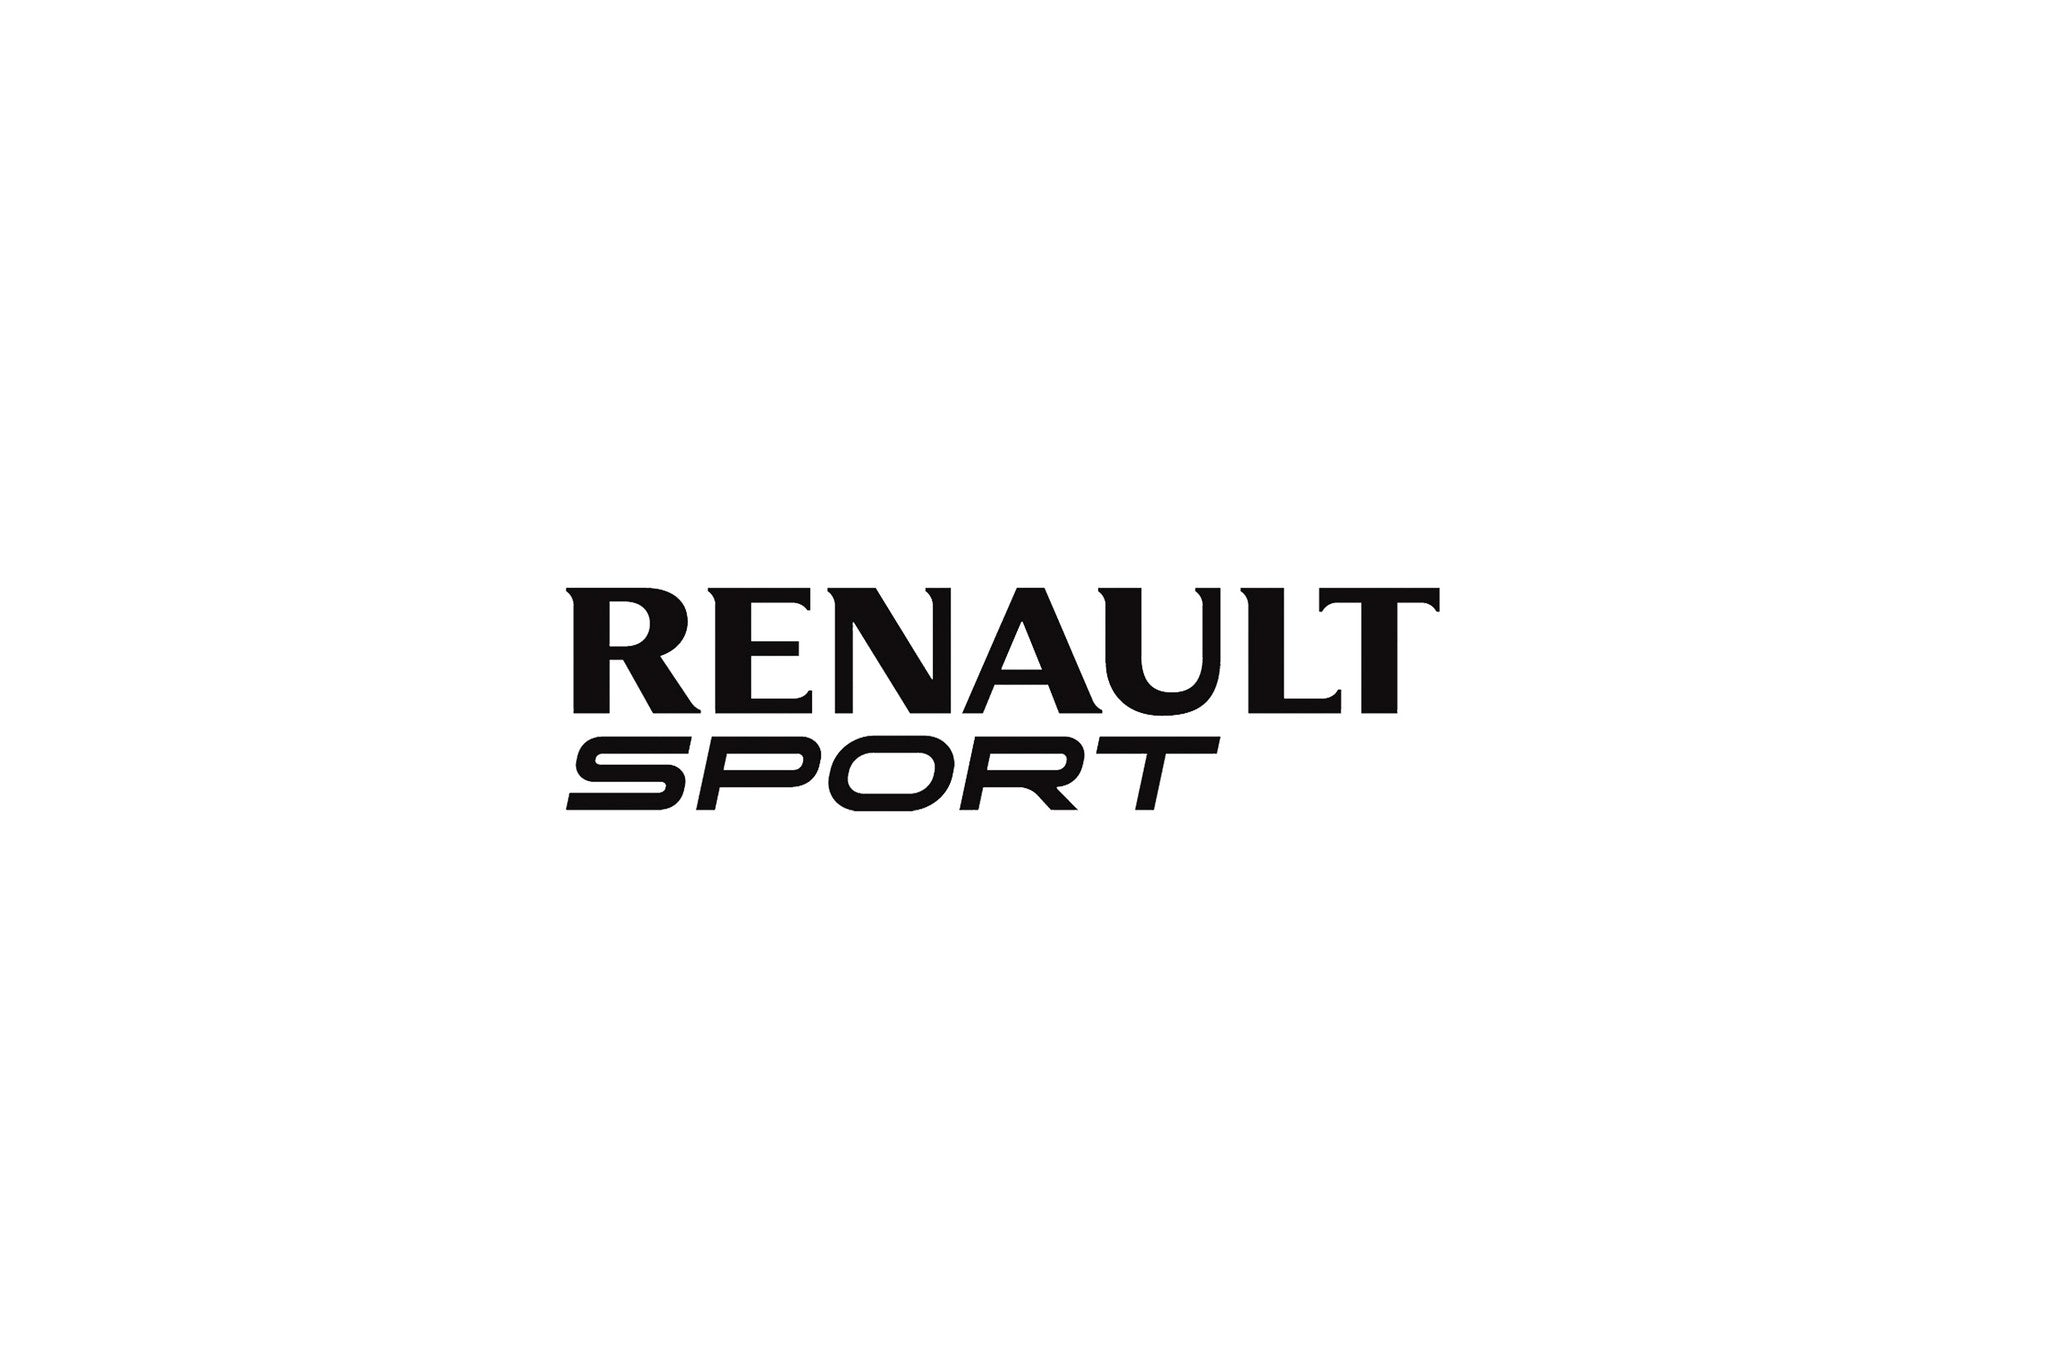 Renault Megane Sport R26 / 225 LUK Clutch & Flywheel Kit